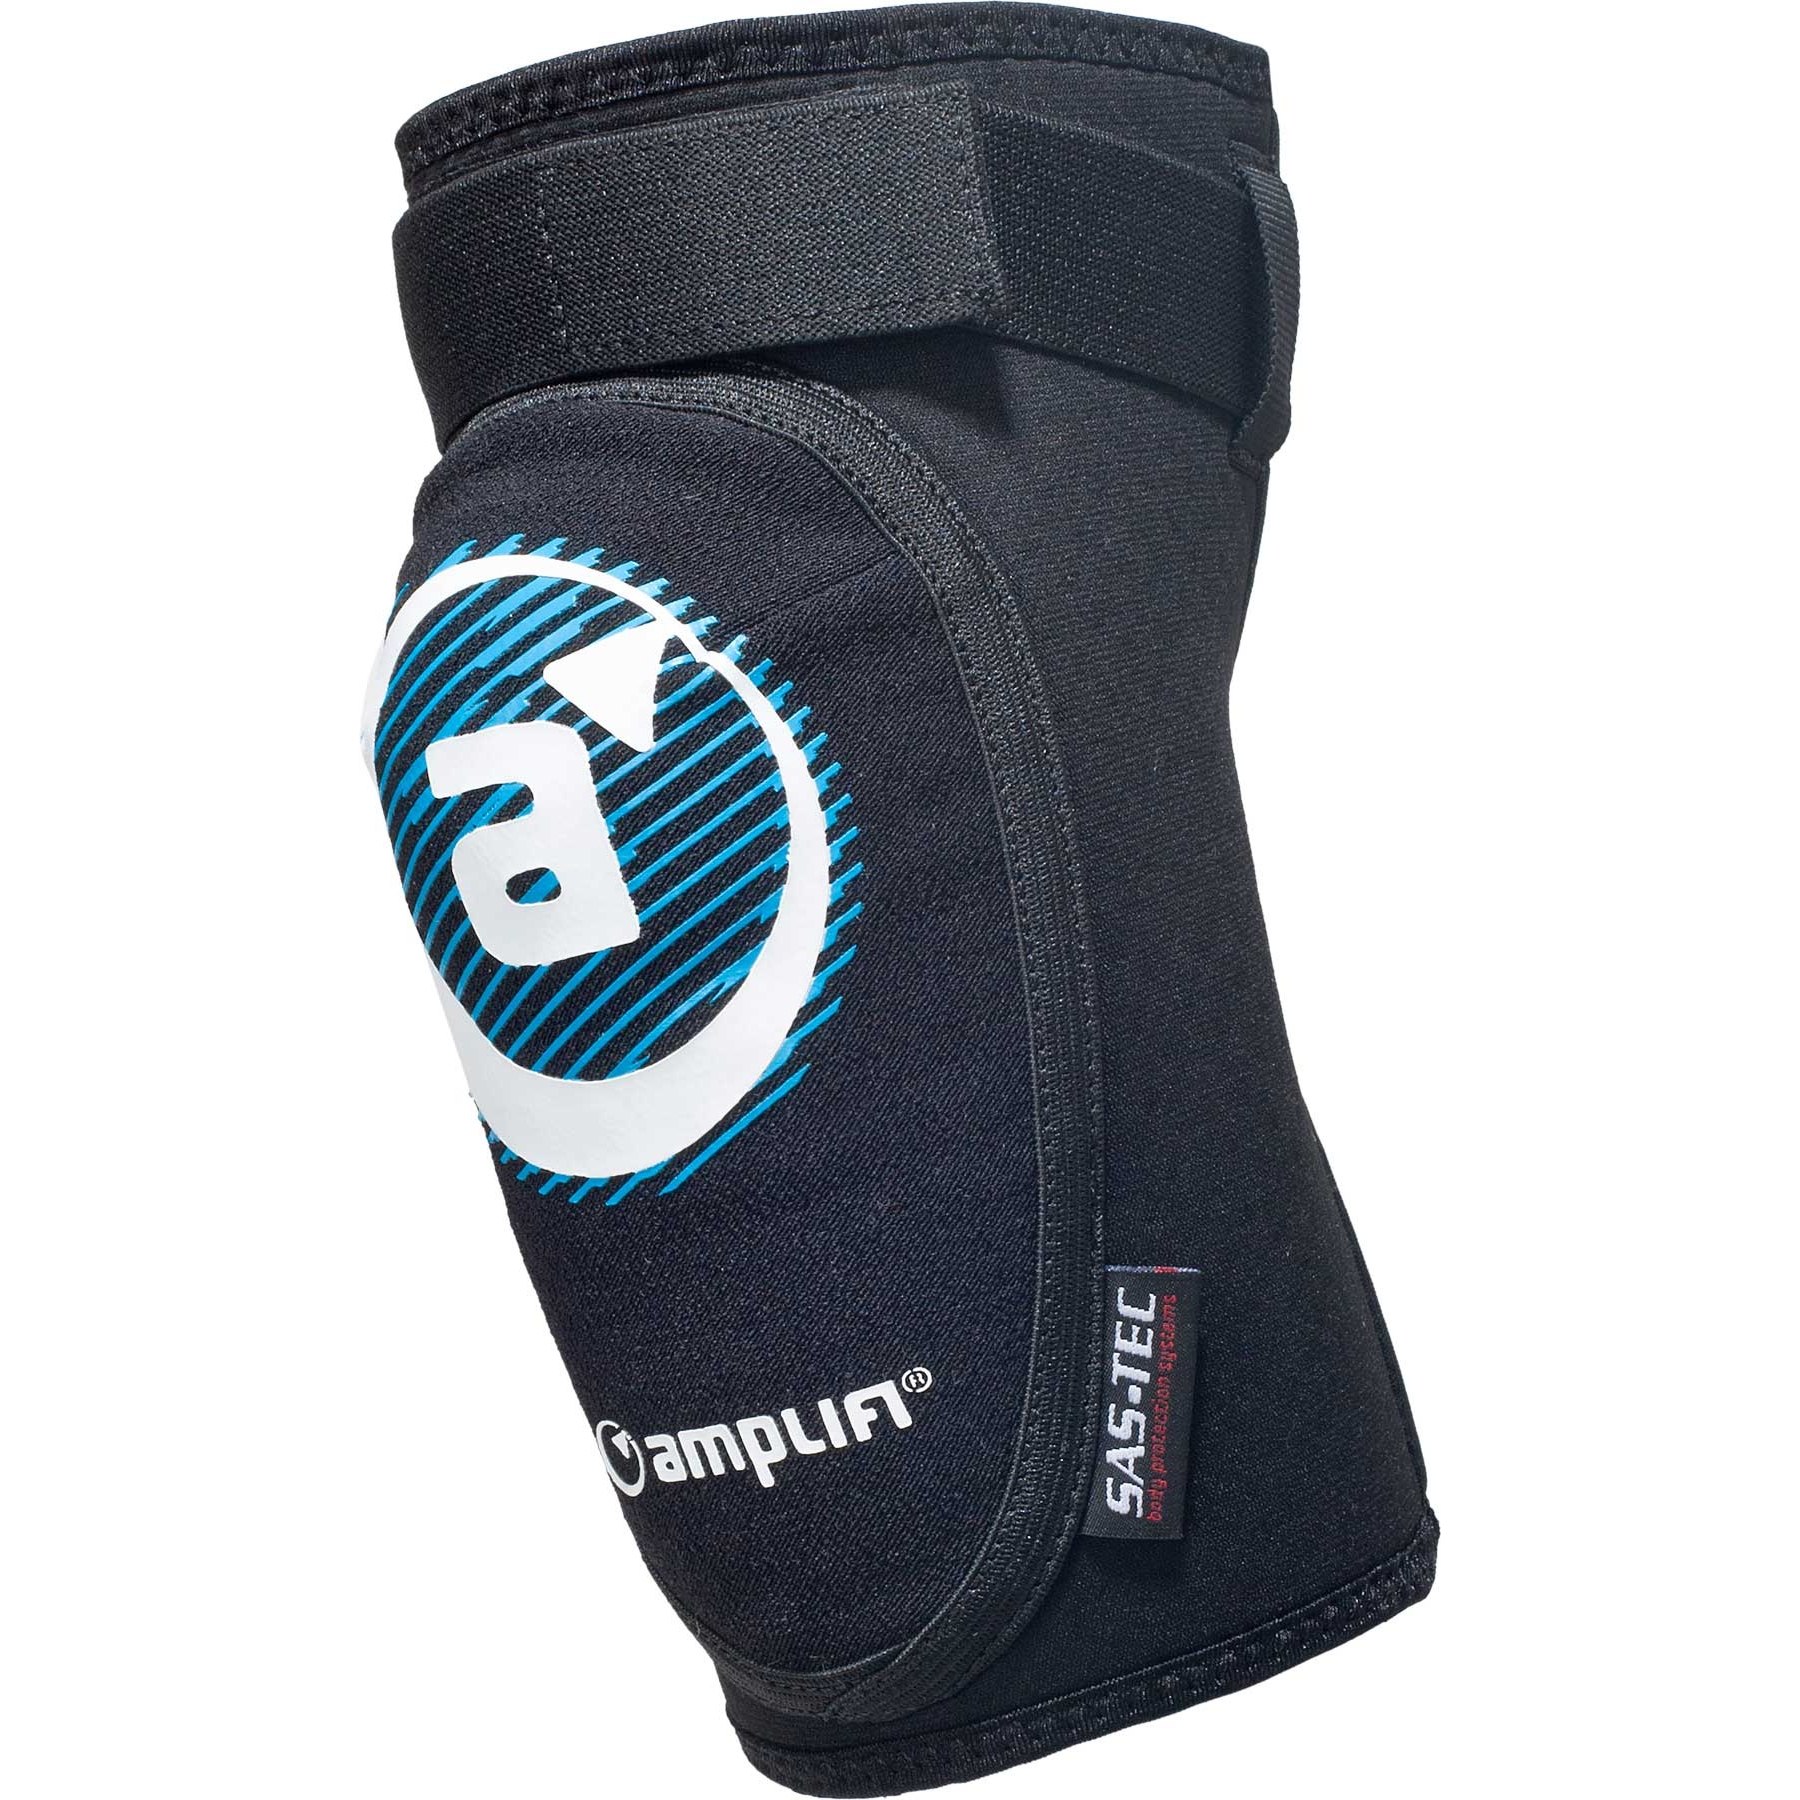 Productfoto van Amplifi Polymer Grom Knee Protector - black